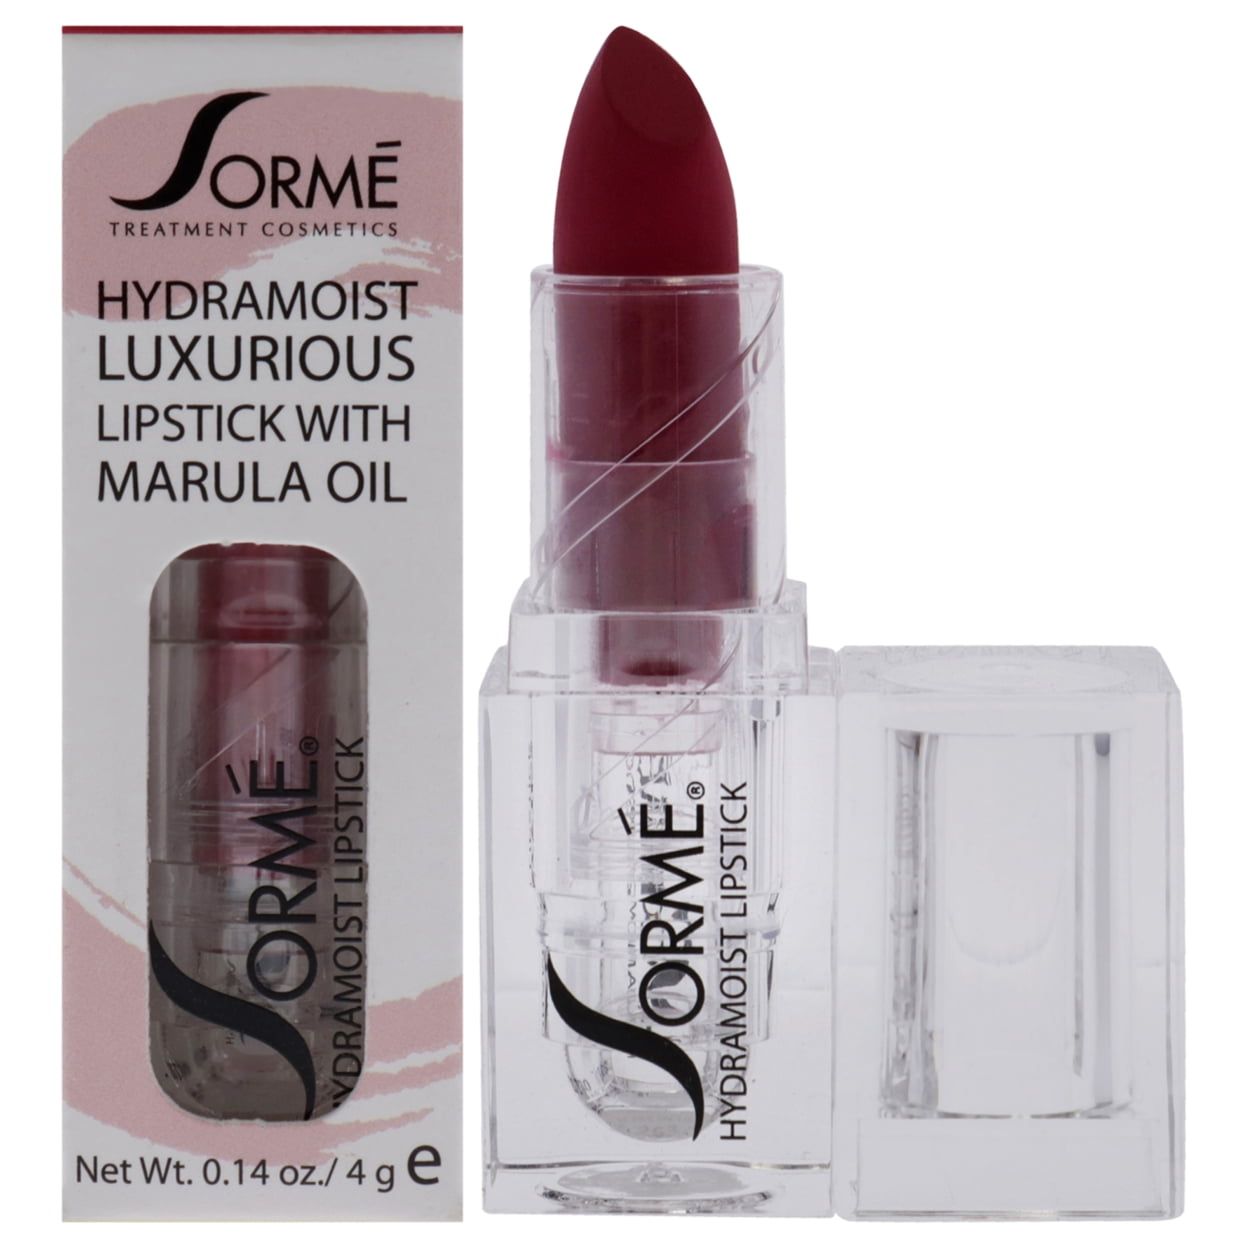 Sorme Cosmetics New Hydramoist Lipstick